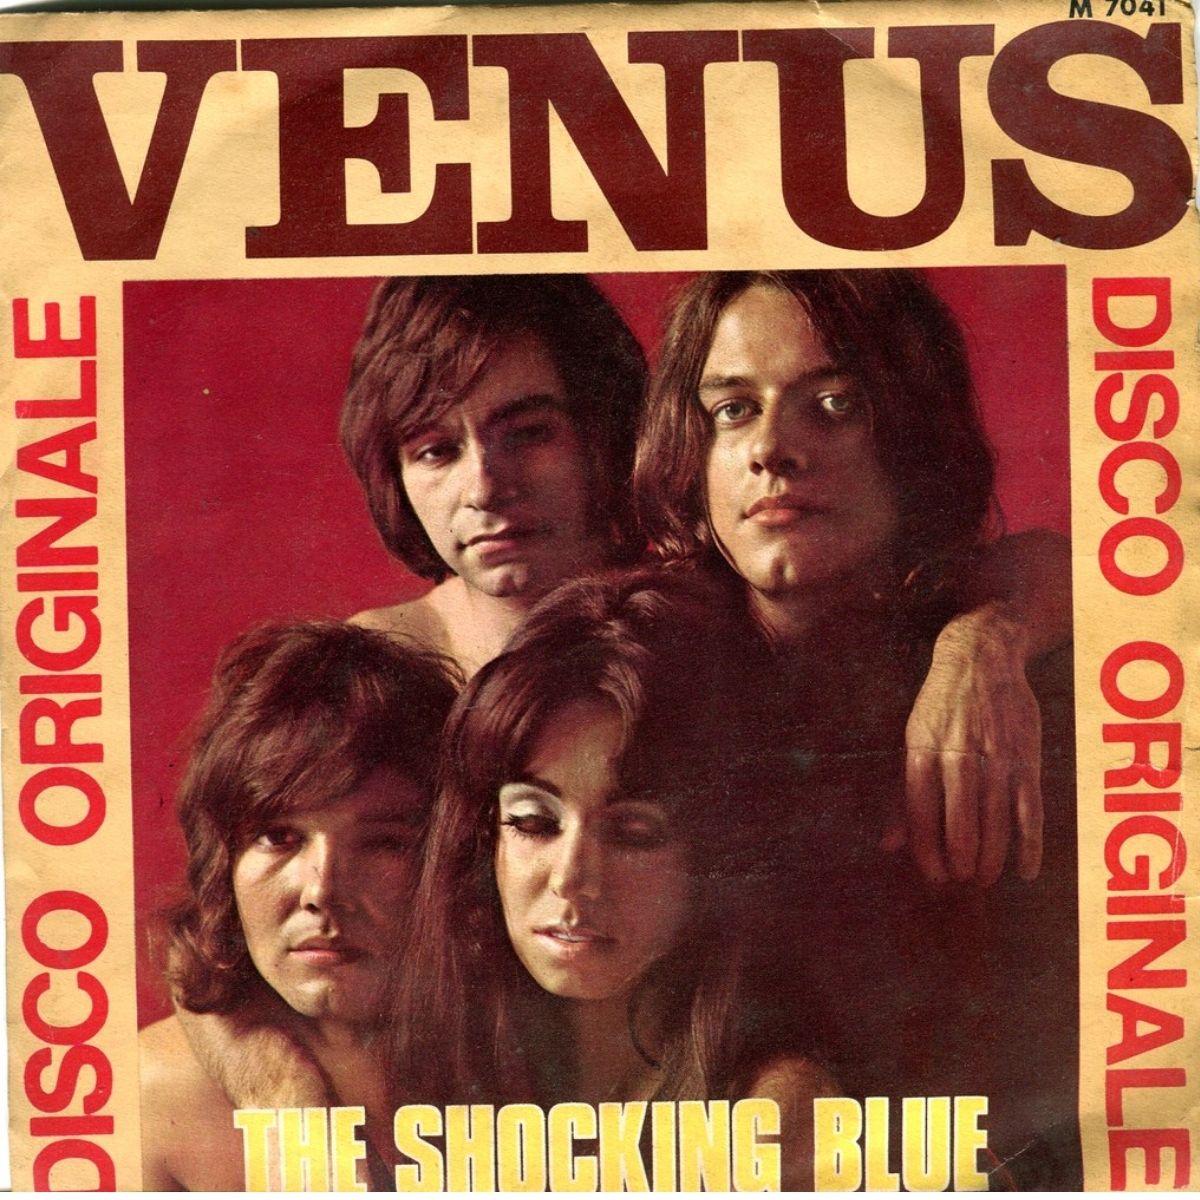 Portada del single "Venus" de Shocking Blue